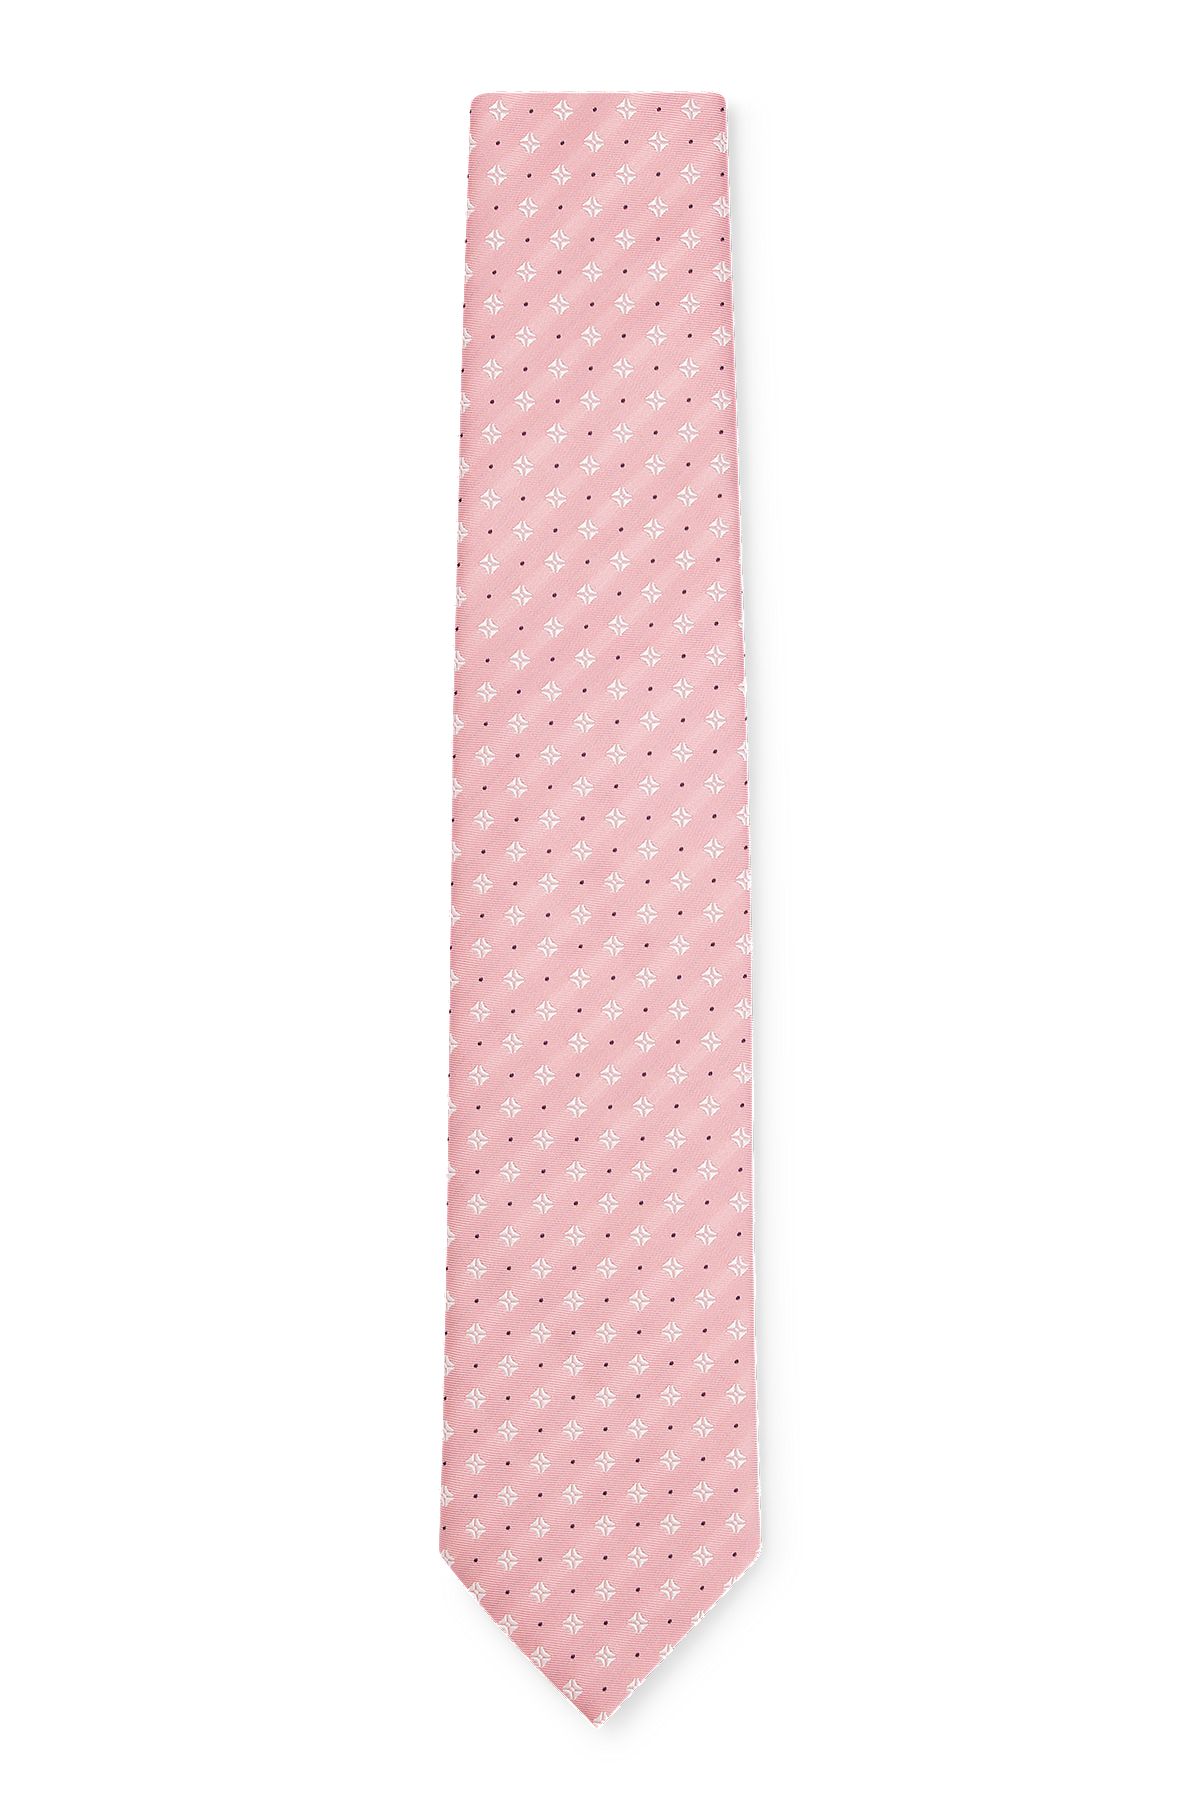 Silk-blend tie with jacquard pattern, light pink